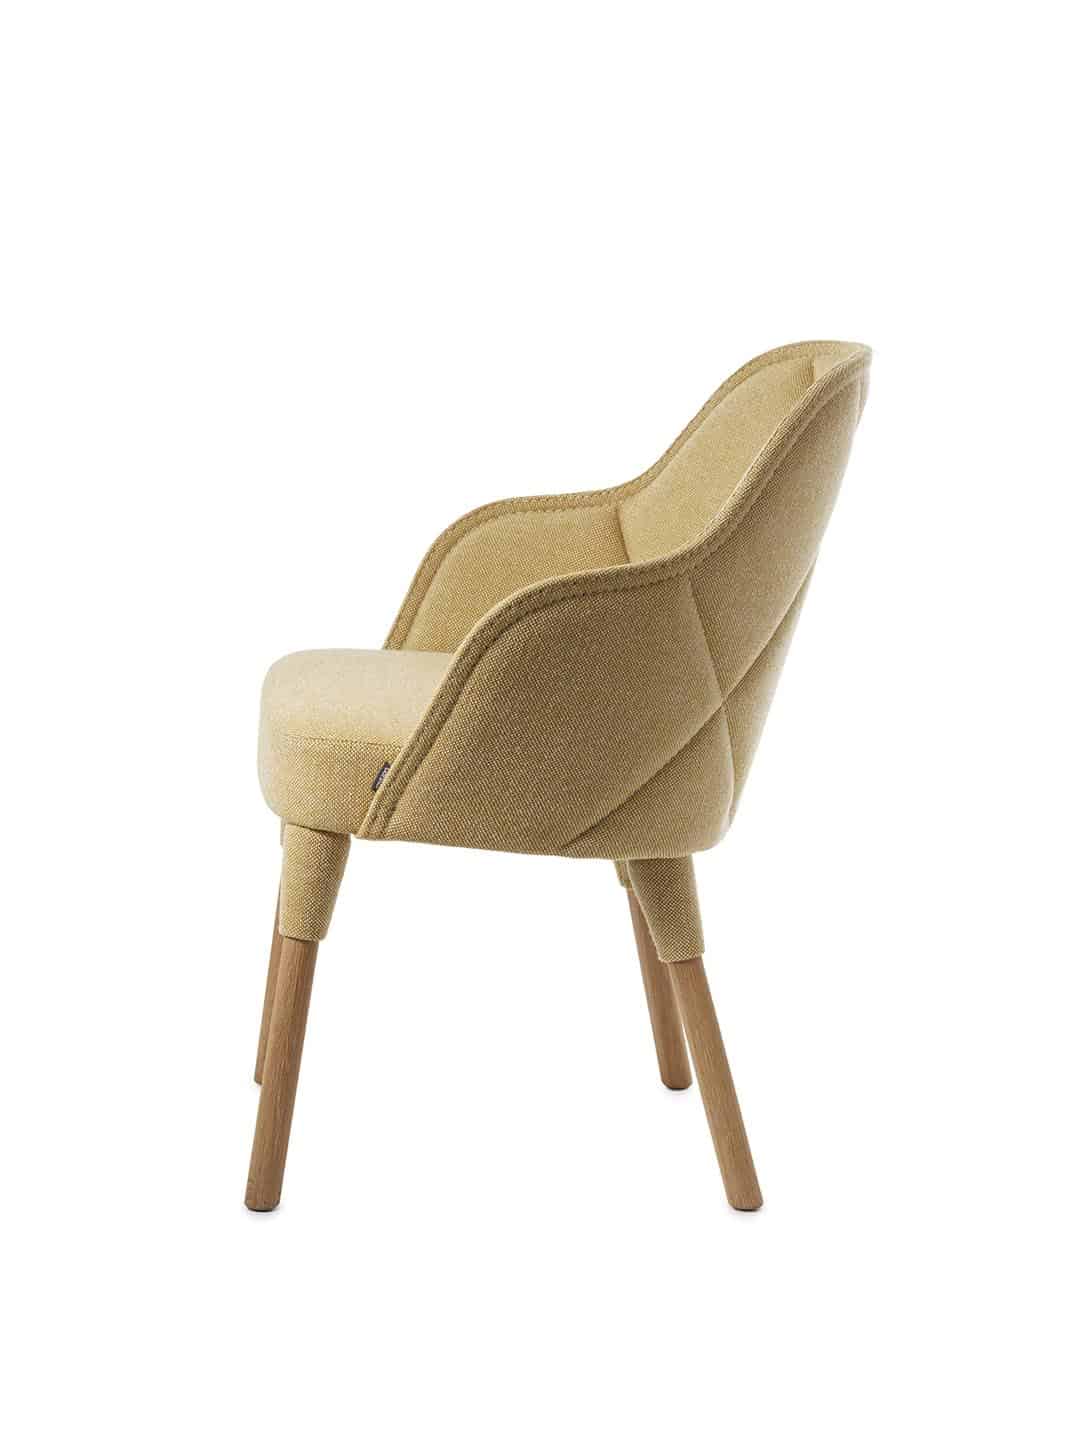 Кресло Garsnas Lina светло-коричневого цвета премиум класса